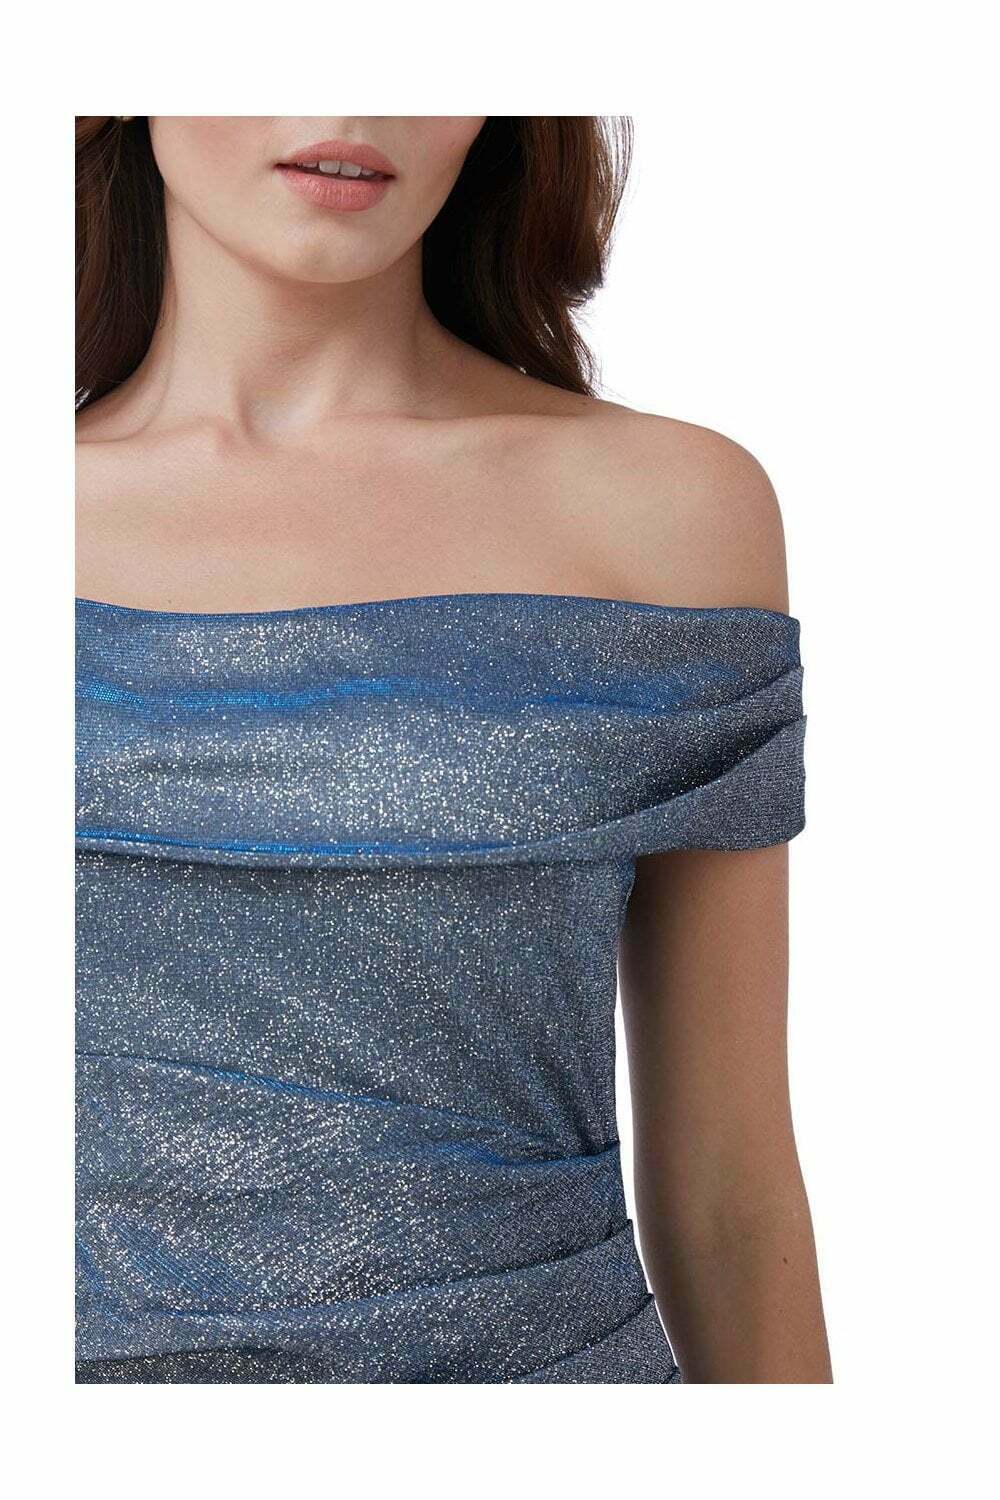 Off-Shoulder Winterblue Side Slit Maxi Dress - Close Up View